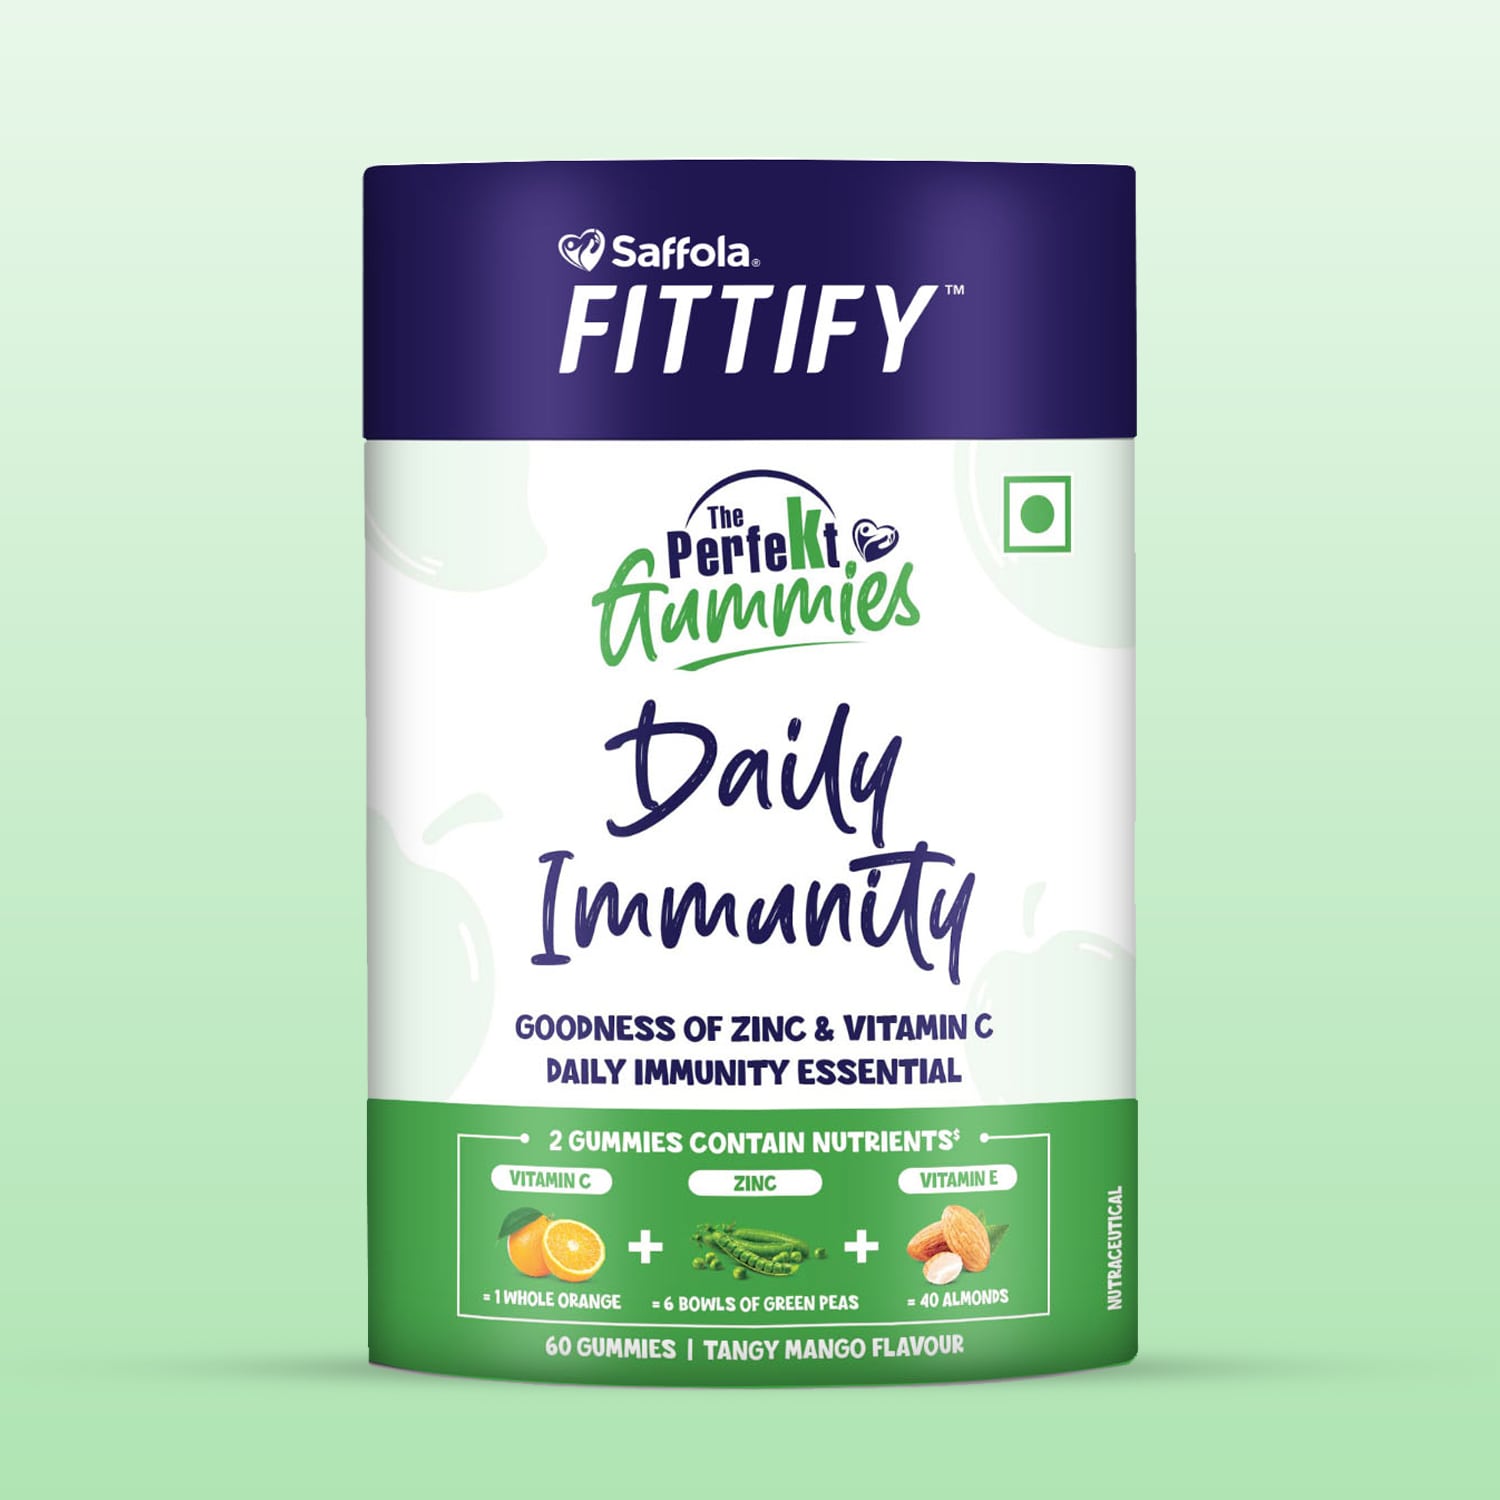 [CRED] Saffola Fittify The Perfekt Gummies For Daily Immunity